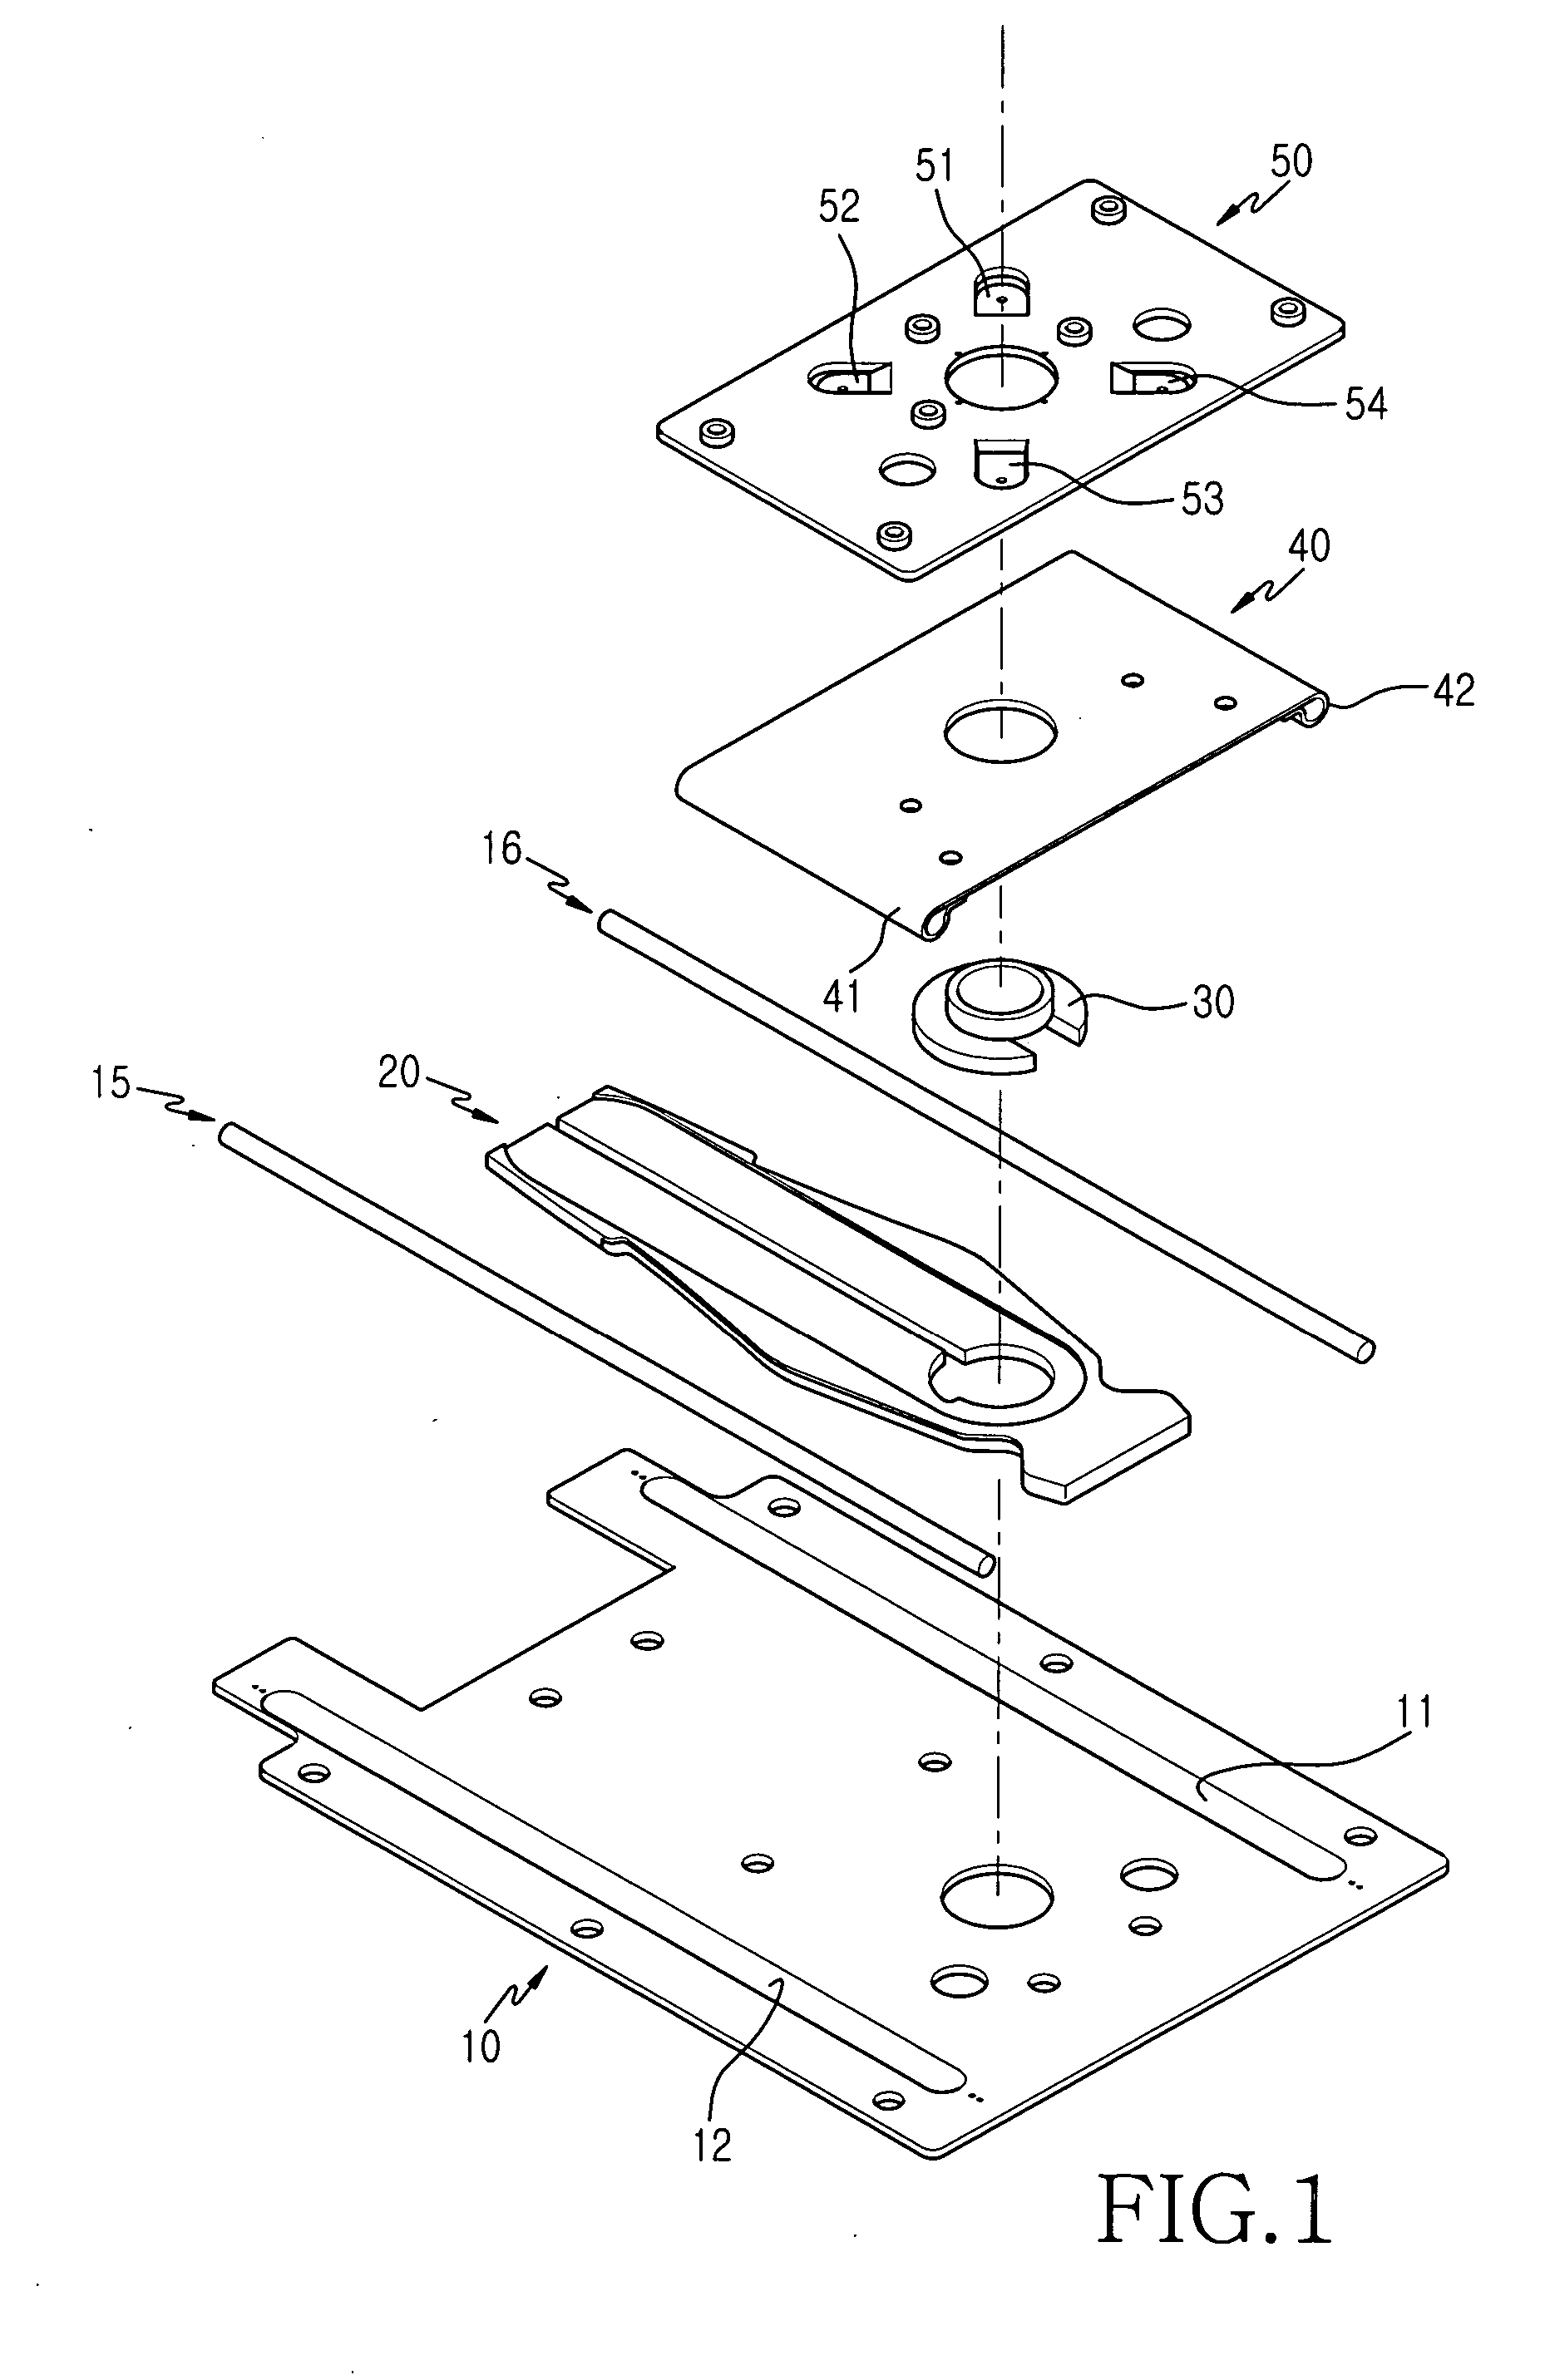 Sliding swing mechanism for portable apparatus